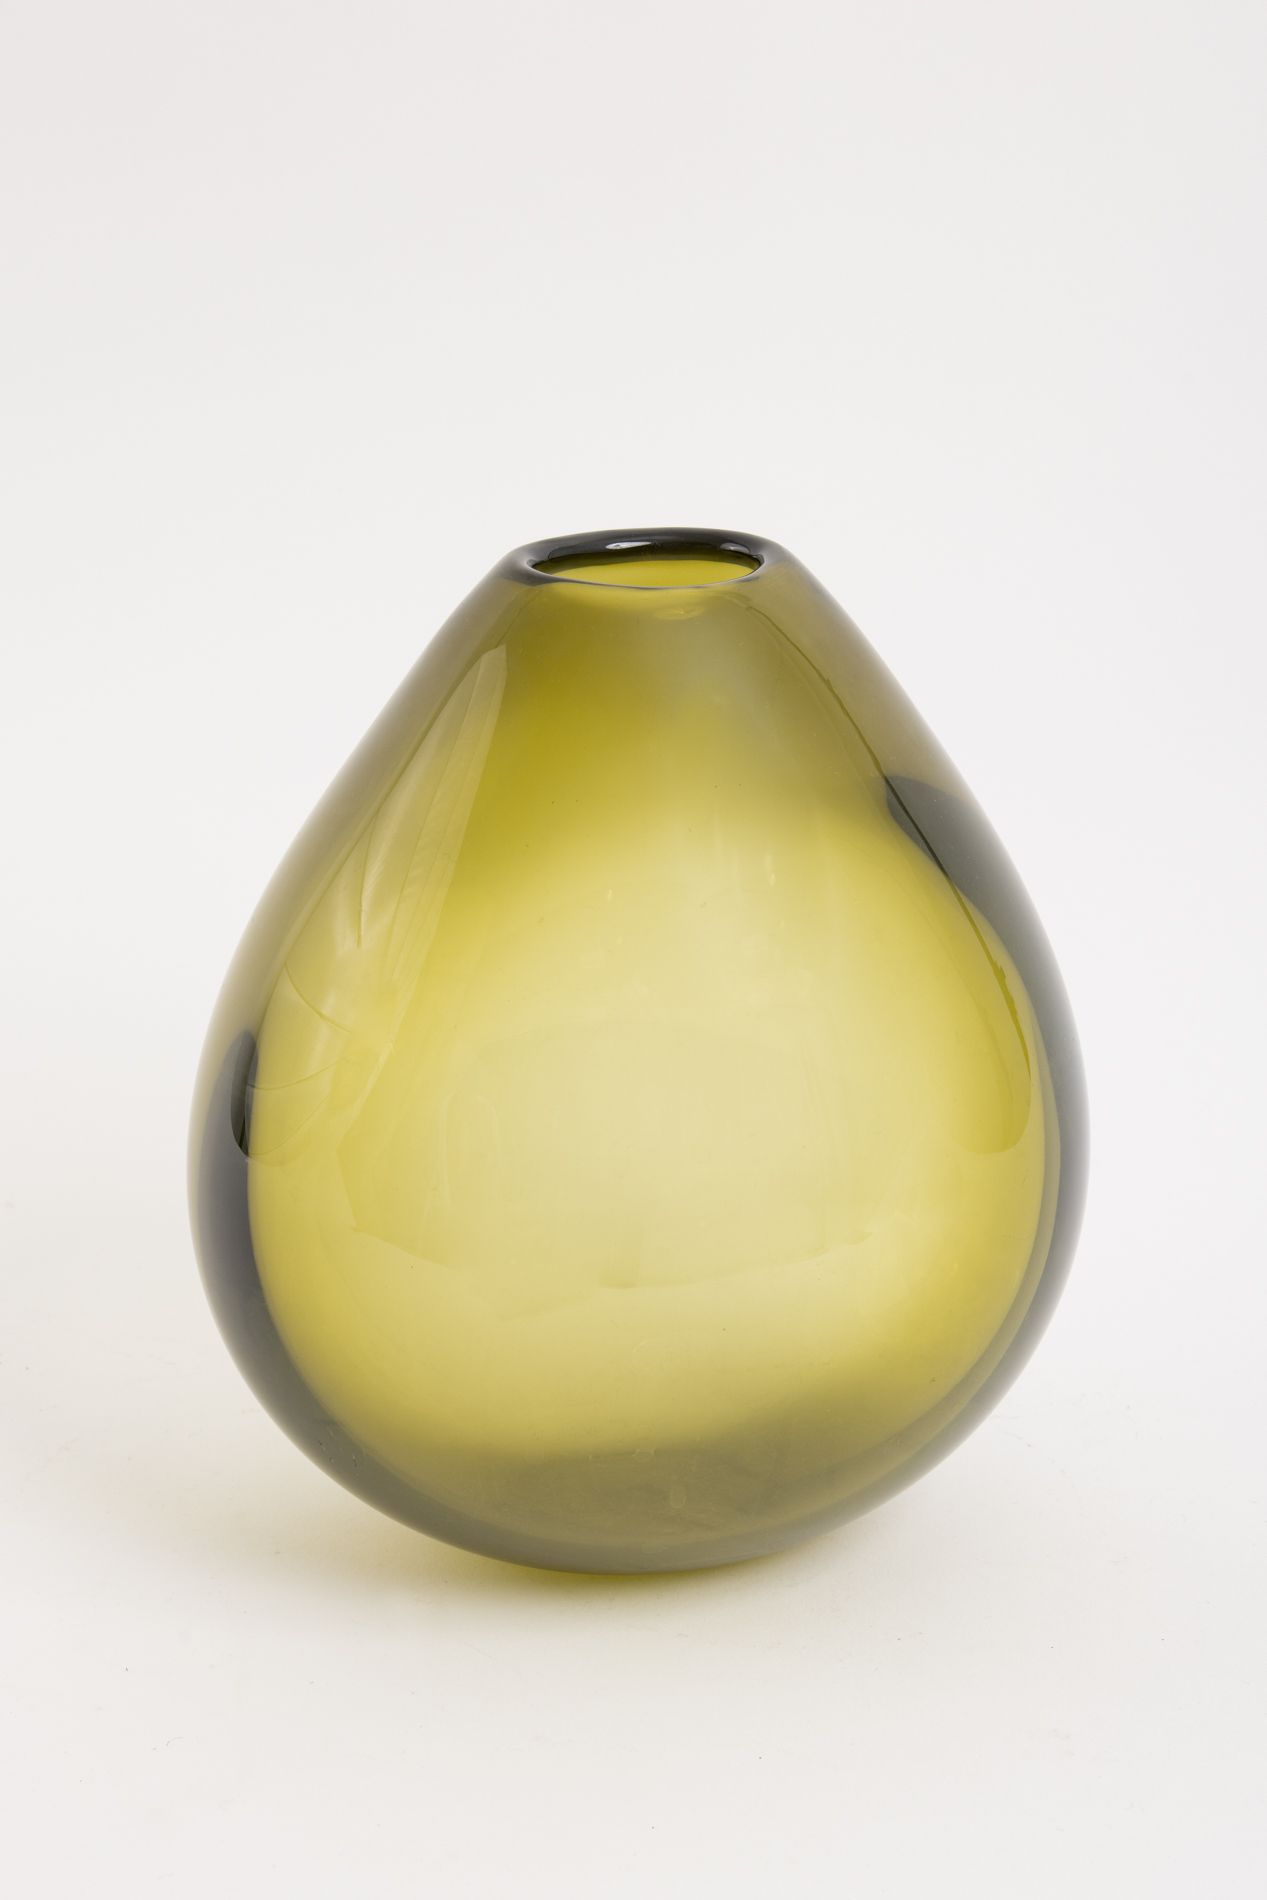 Null 佩尔-卢特肯(1916-1998), 霍尔米加德 丹麦
烟熏黄玻璃卵形花瓶。已签名。 
H.29厘米